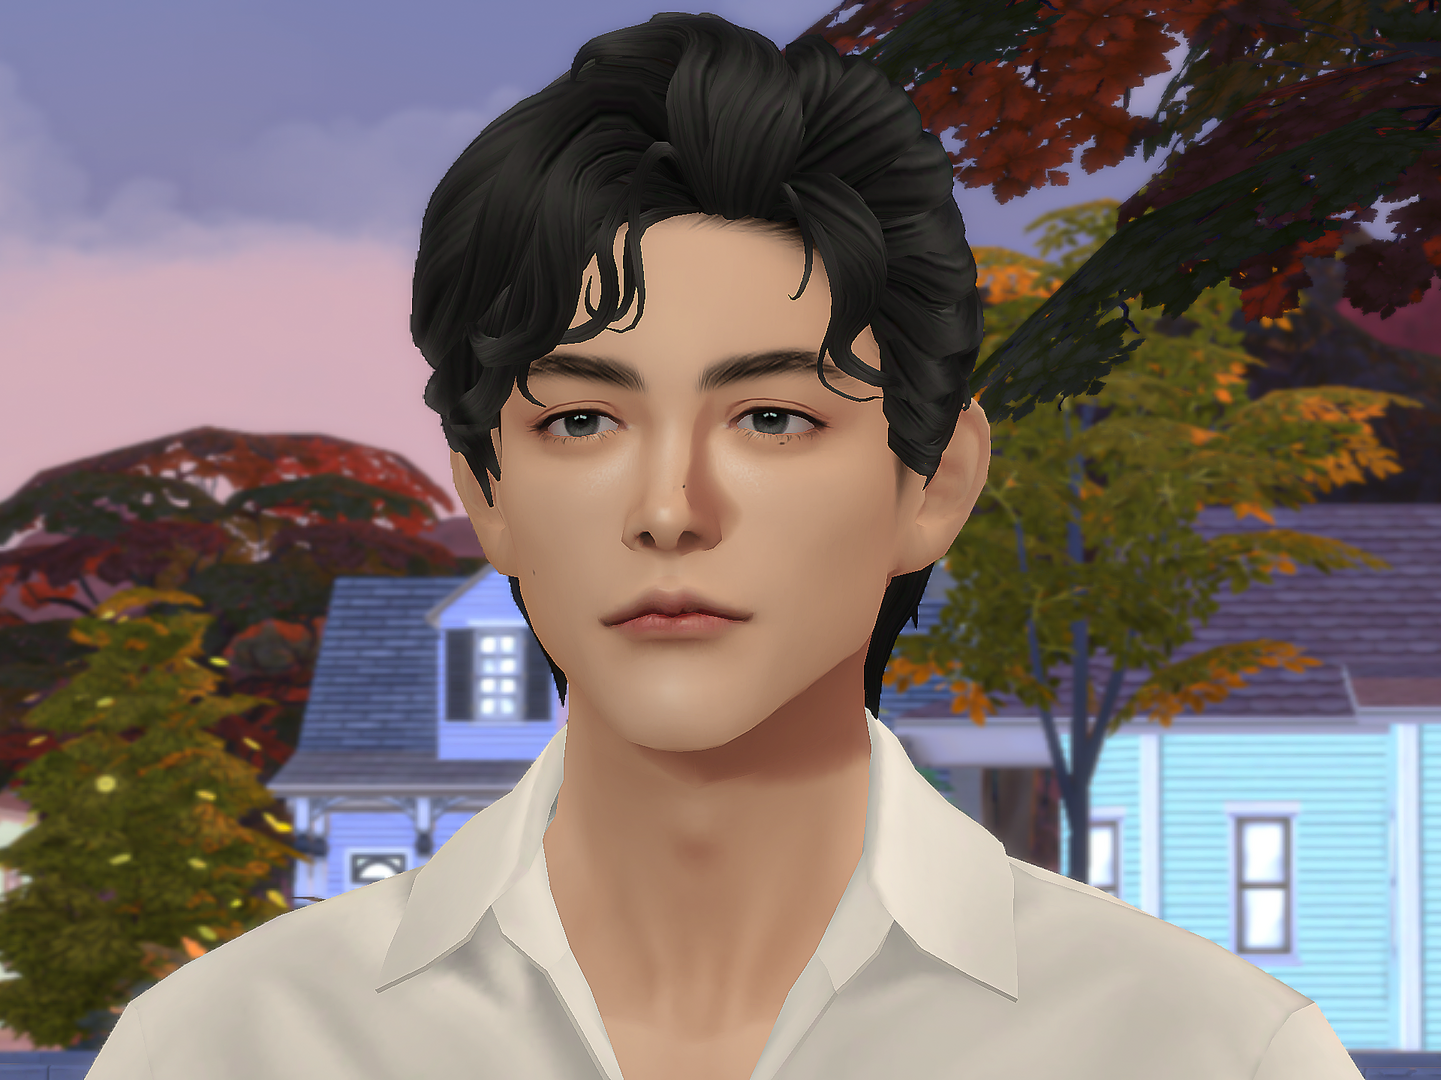 Asian male sim - The Sims 4 - Sims - LoversLab